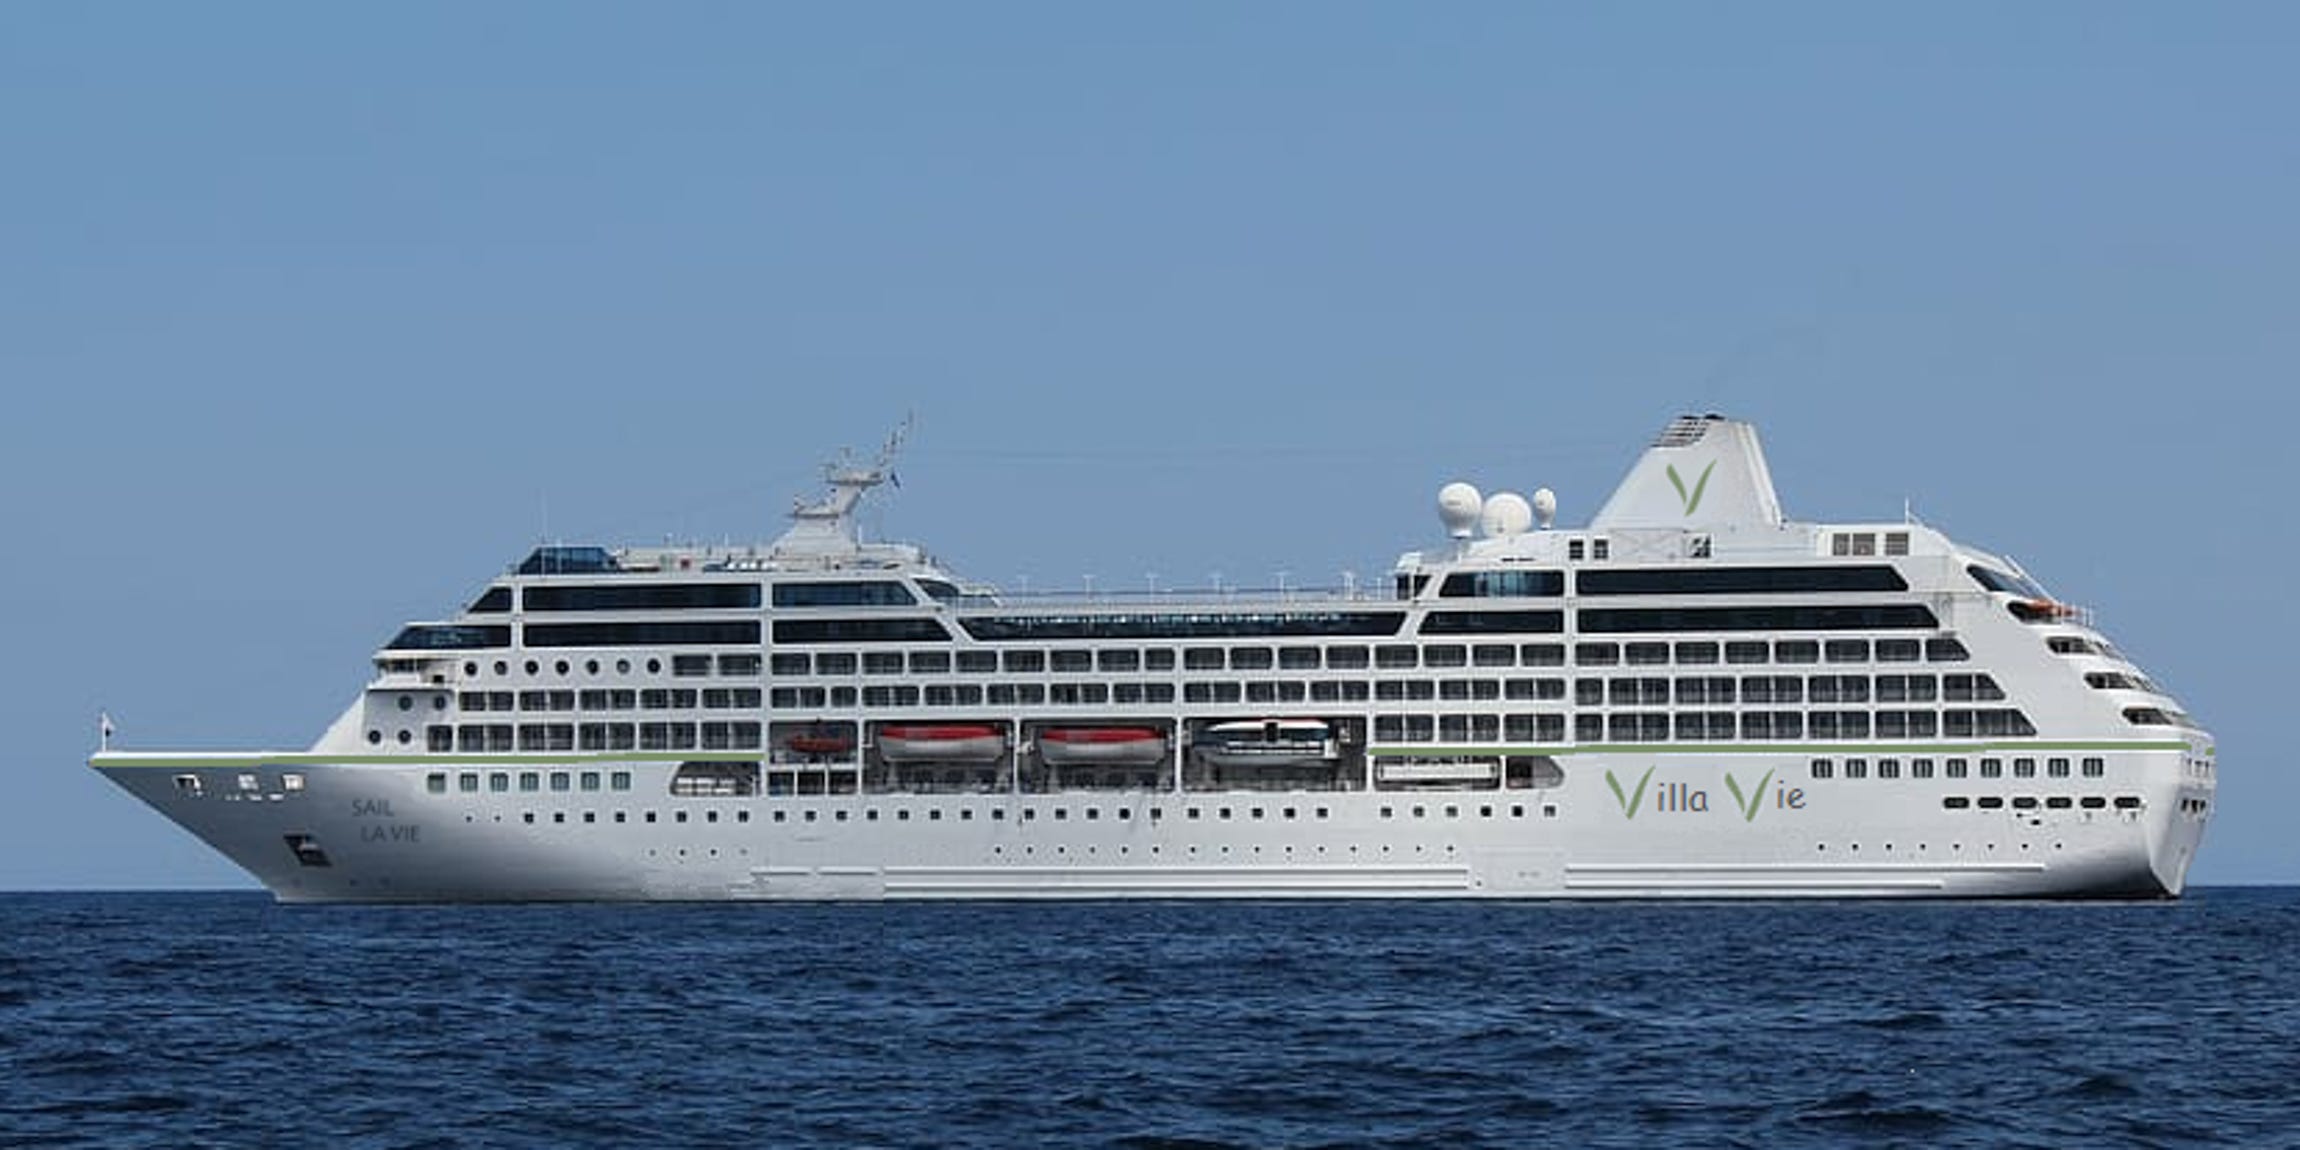 Rendering of Villa Vie cruise ship